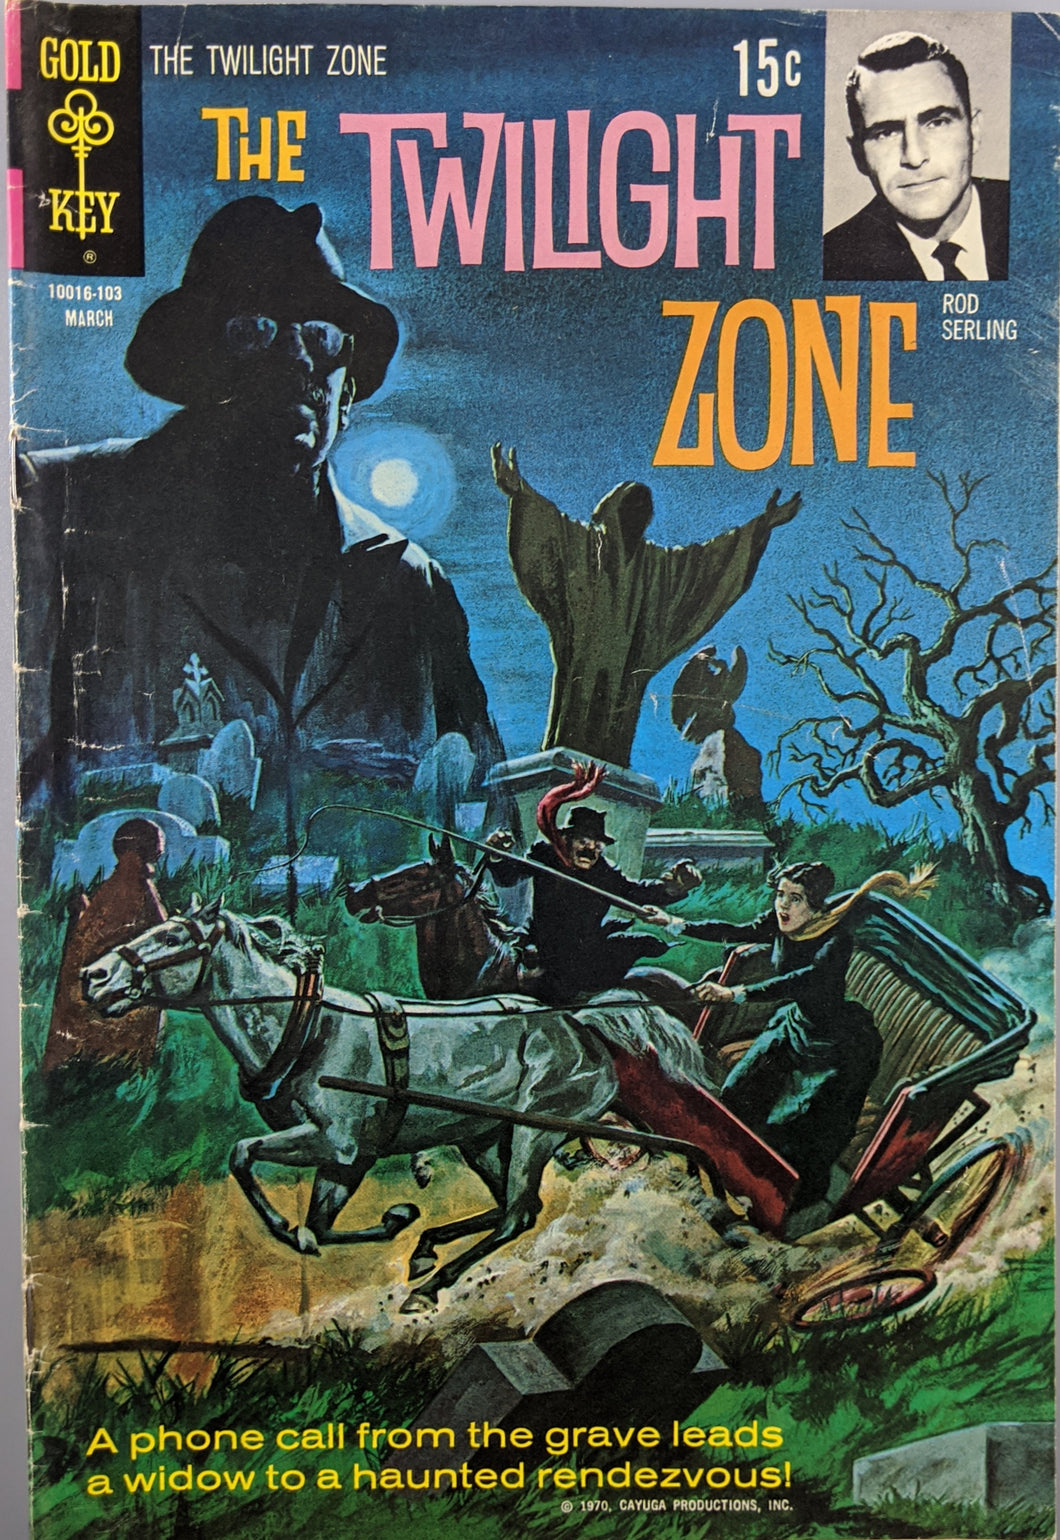 The Twilight Zone #36 Comic Book Cover Art